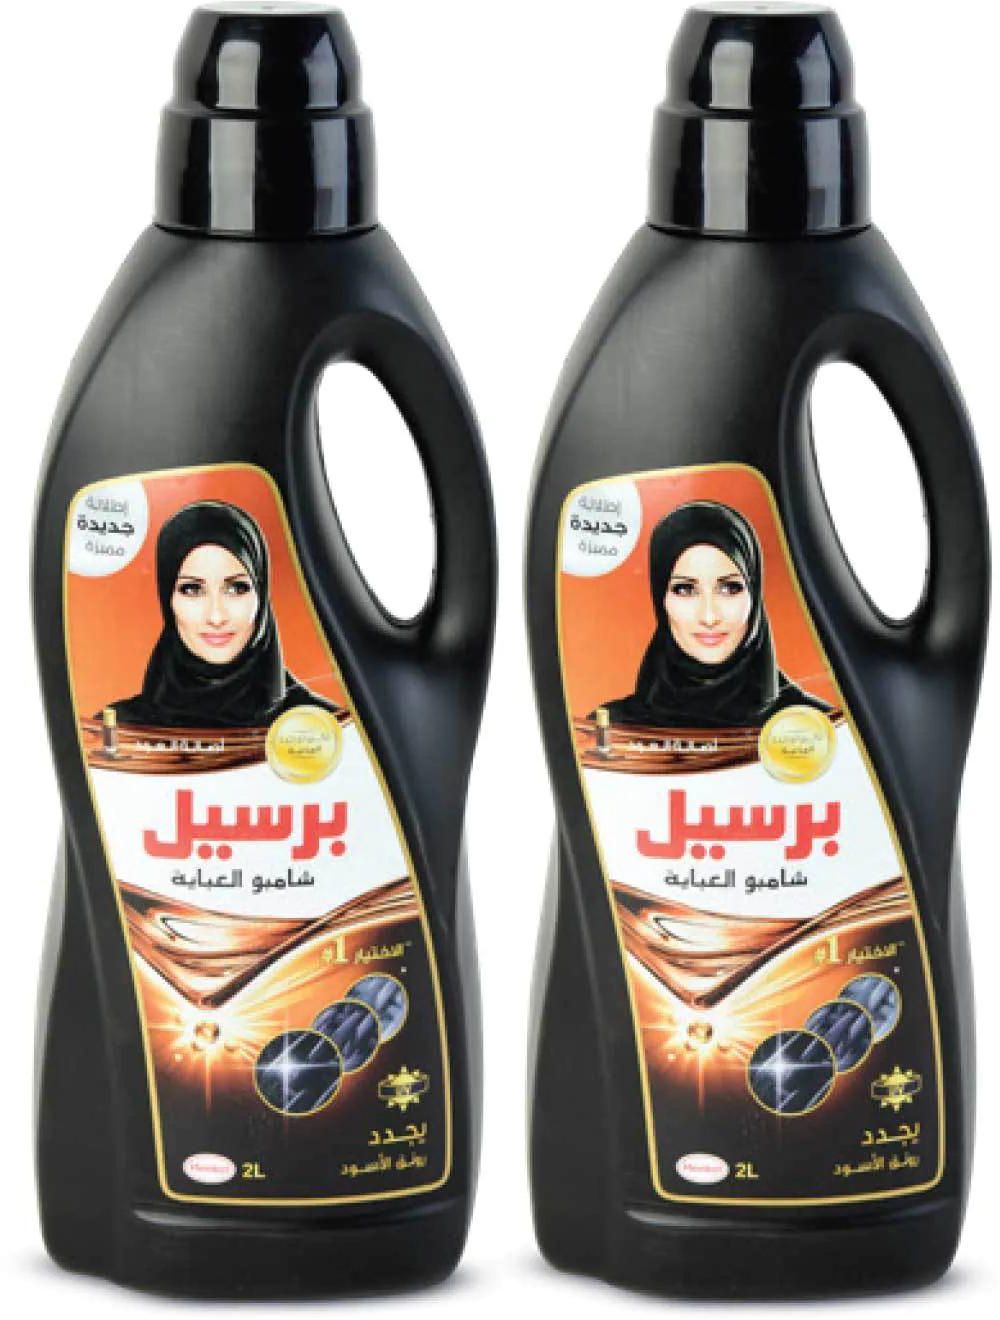 Persil 2-in-1 abaya shampoo french perfume 1.8 L x 2